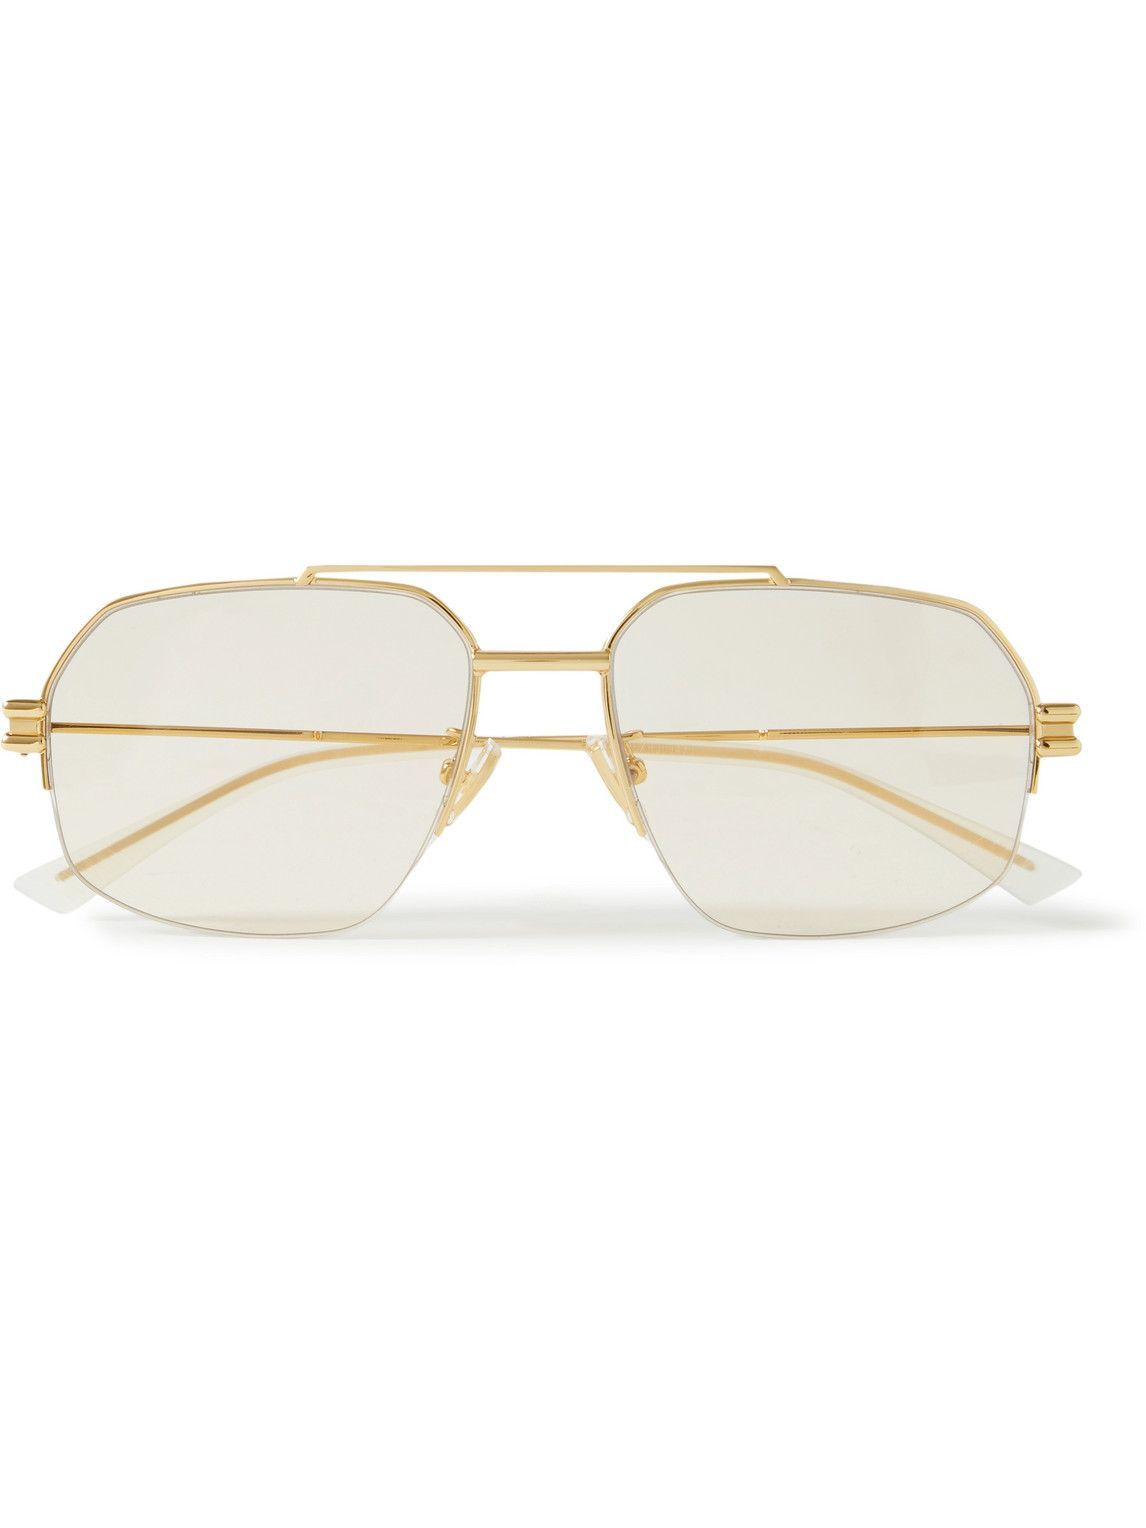 Bottega Veneta - Aviator-Style Gold-Tone Sunglasses Bottega Veneta